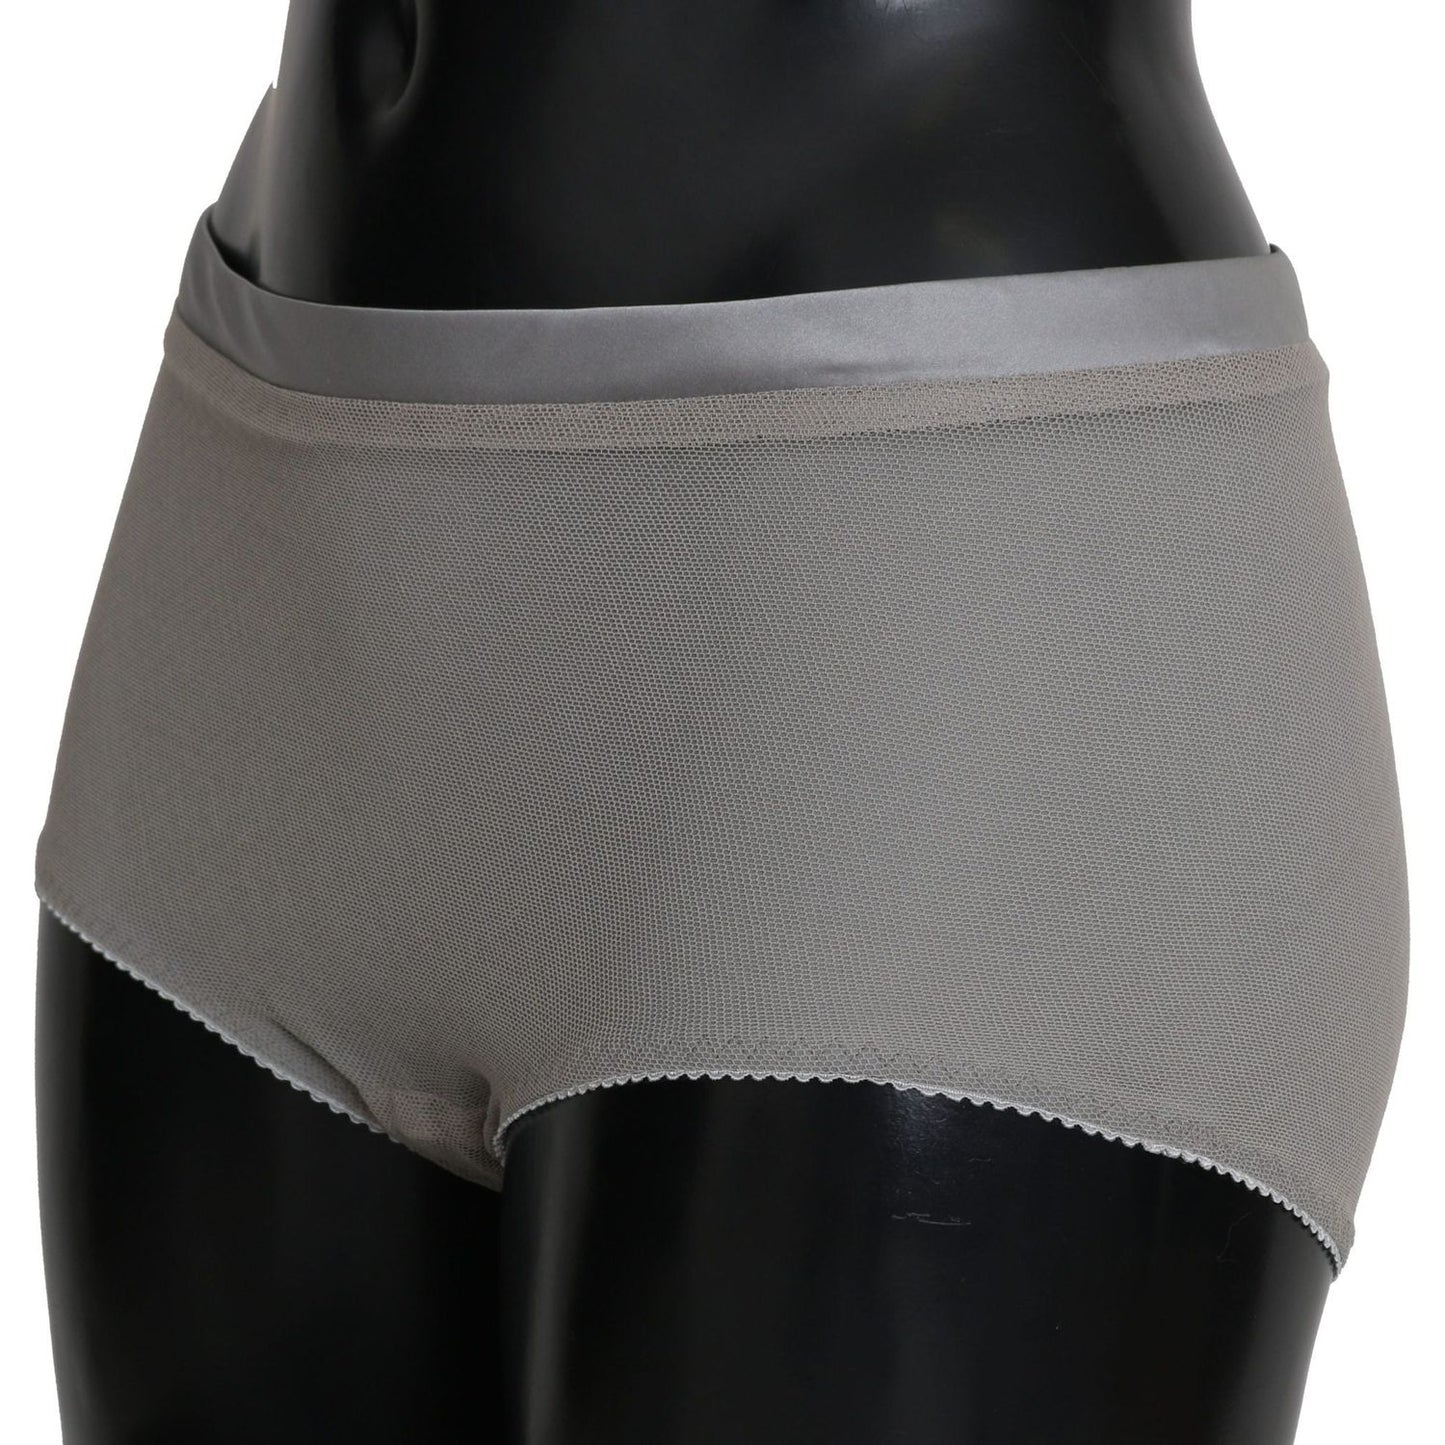 Dolce & Gabbana Underwear Silver With Net Silk Bottoms underwear-silver-with-net-silk-bottoms IMG_3700-scaled-64f5275c-2bd.jpg